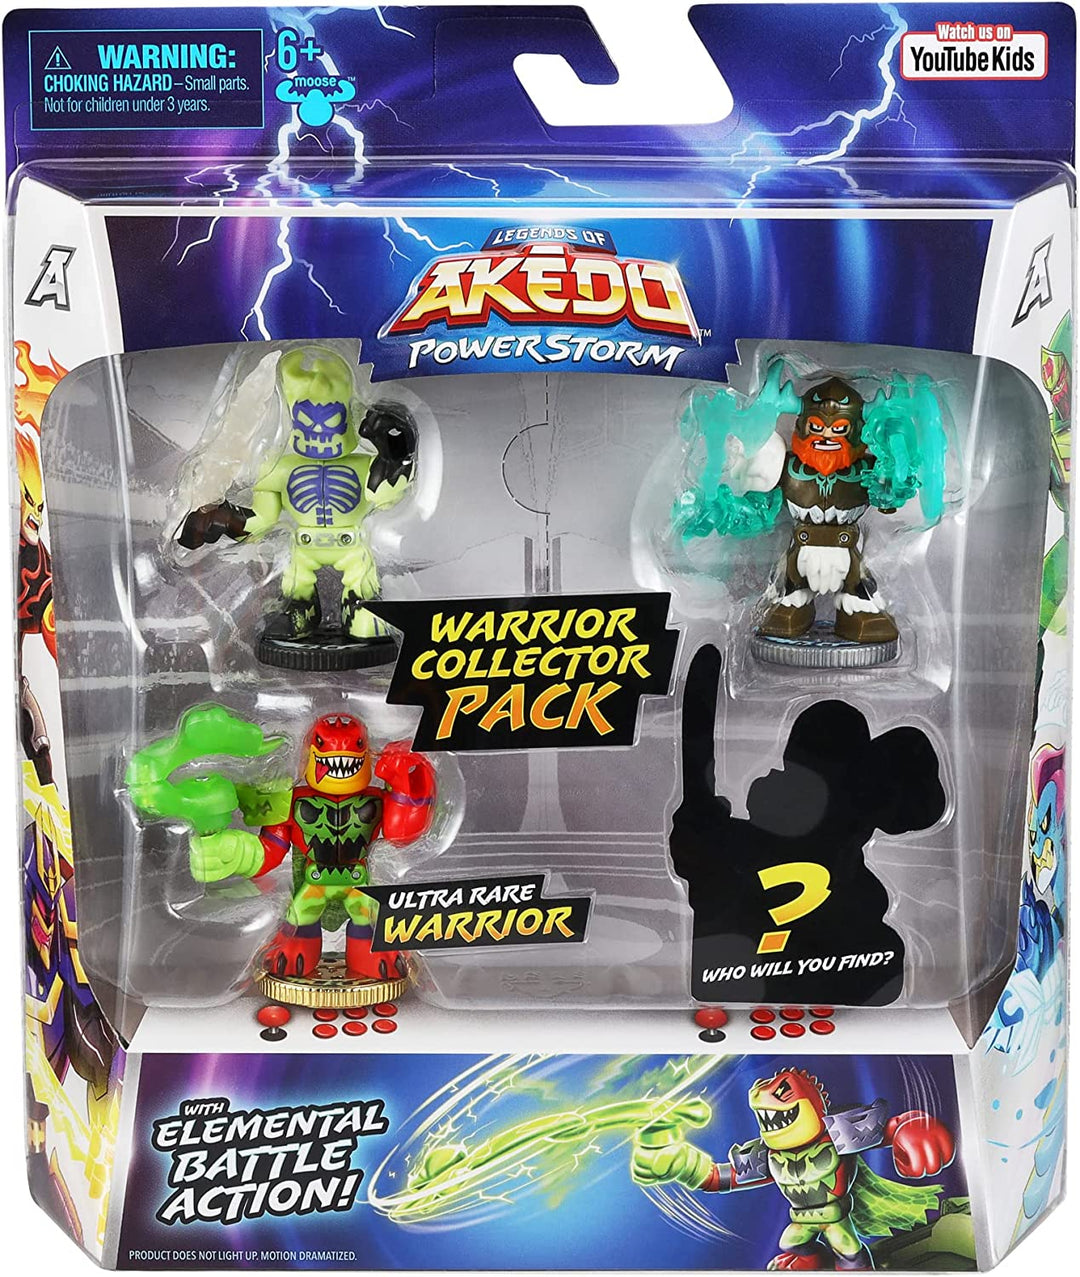 Legends of Akedo: Powerstorm Warrior Collector Pack with 4 Warrior Figures